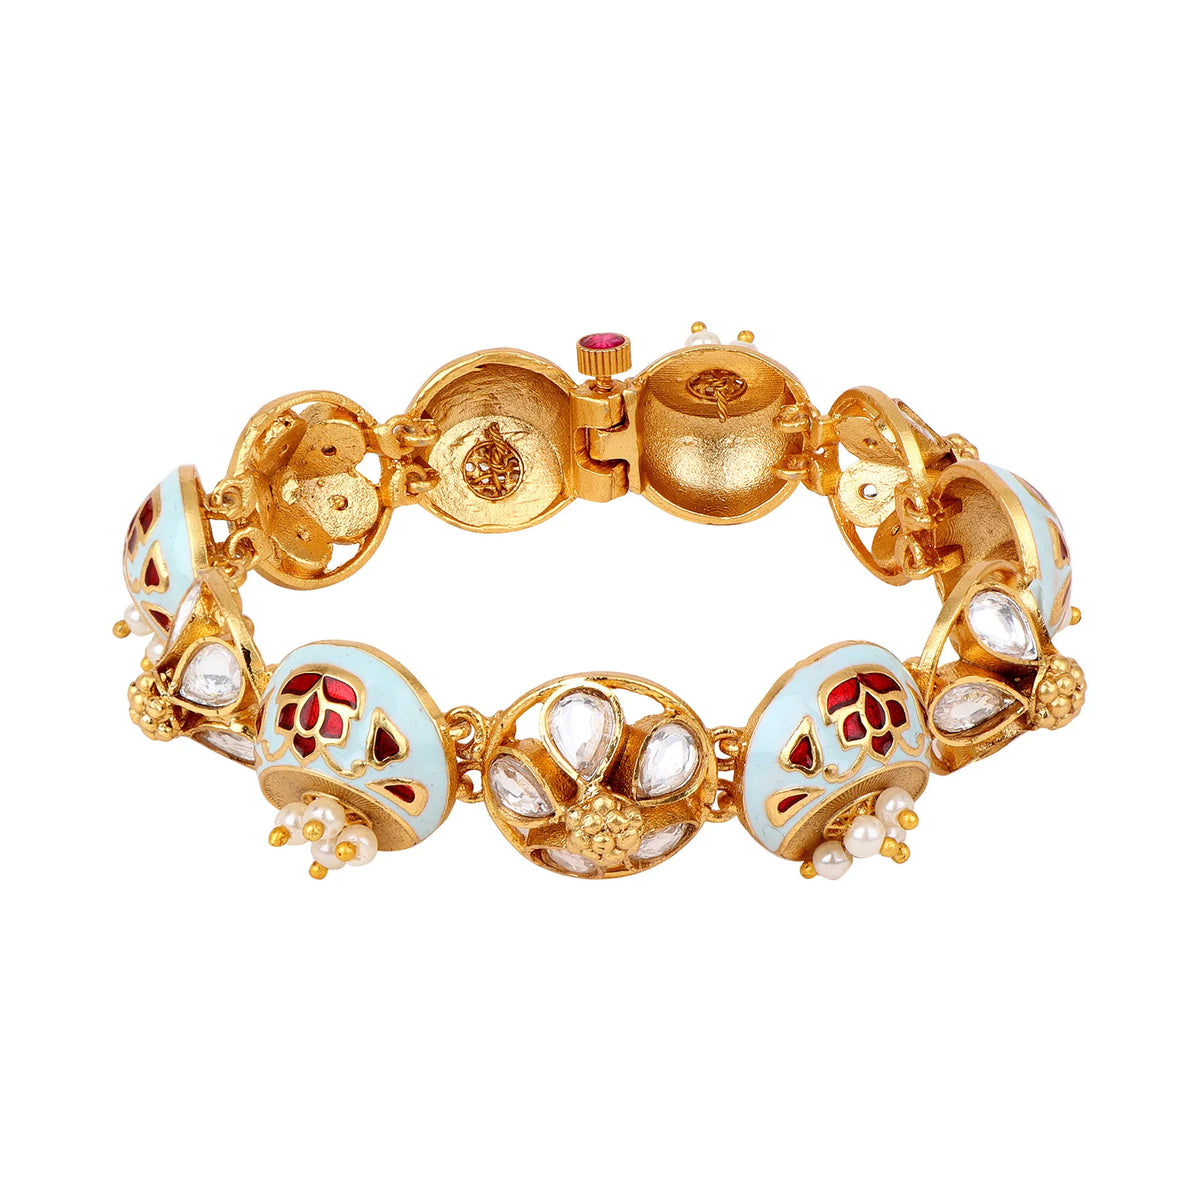 Flower Shape Meenakari Kundan Bracelet, Kundan Stone Chain Bracelet, Indian traditional bracelet, Bollywood Indian Jewelry | Gifts for Her